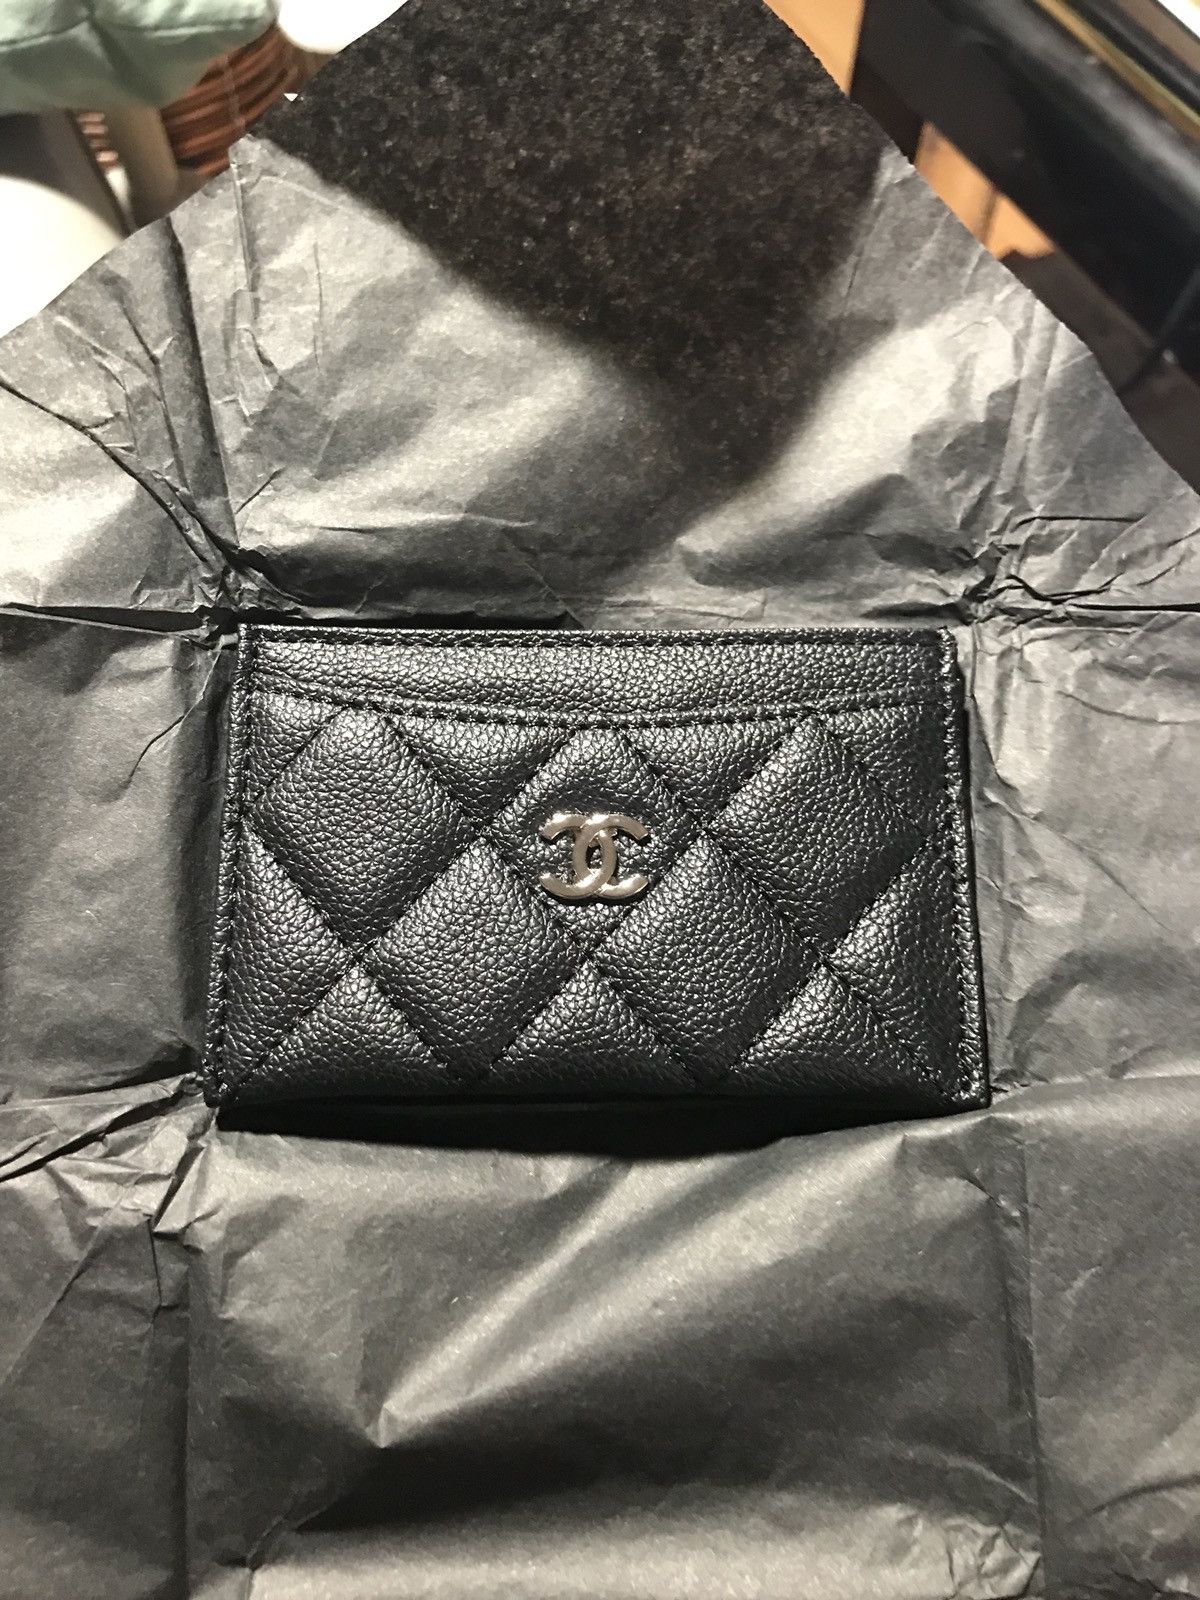 Chanel VIP gift